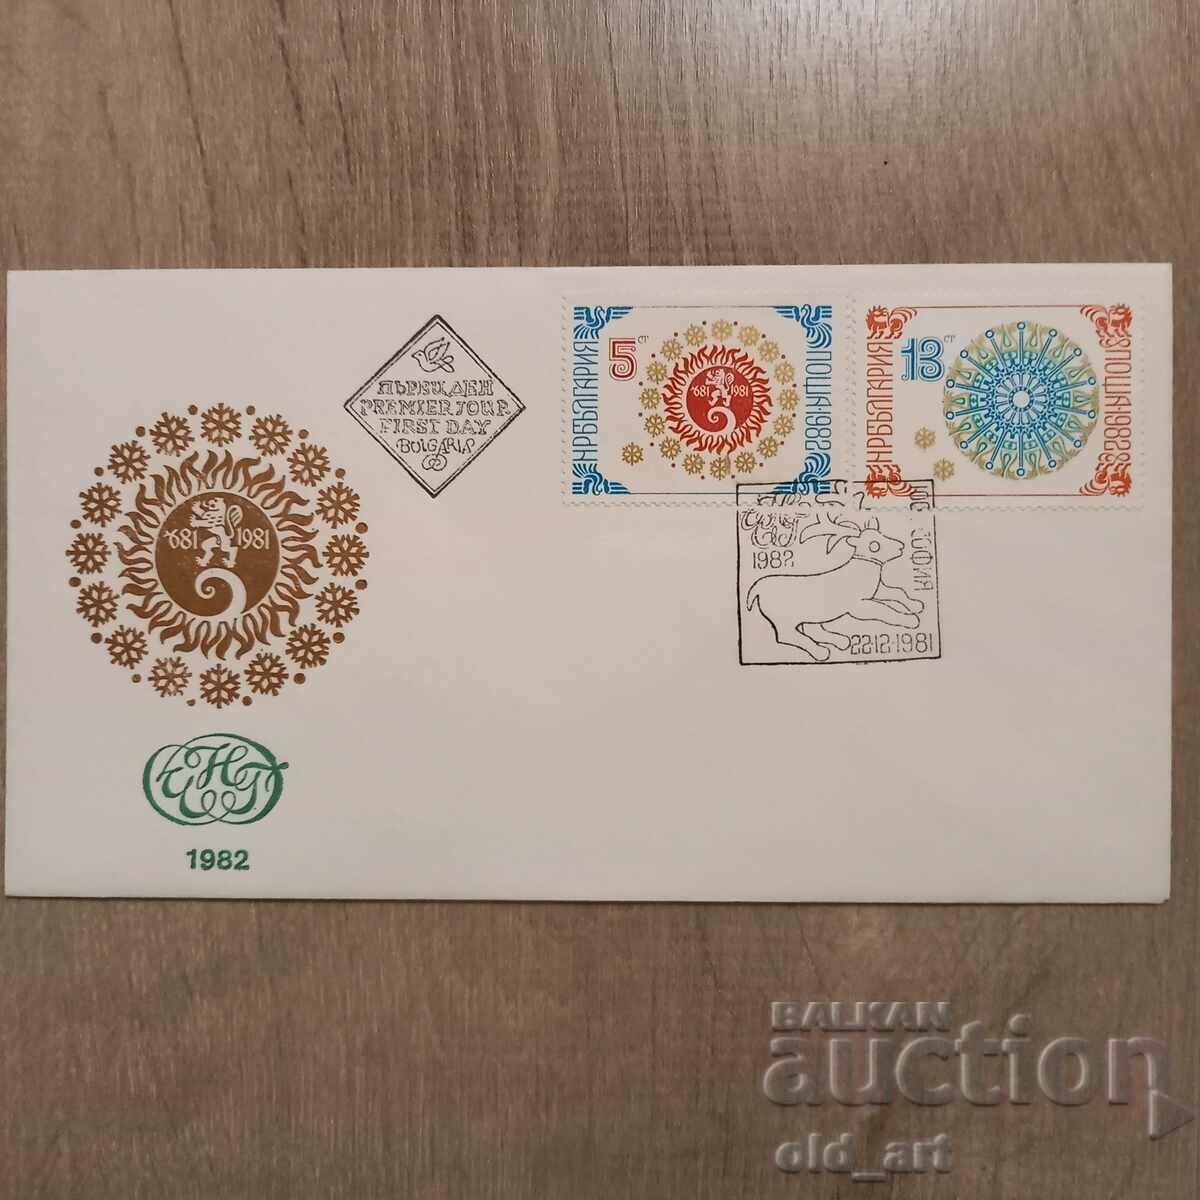 Postal envelope - ChNG 1982